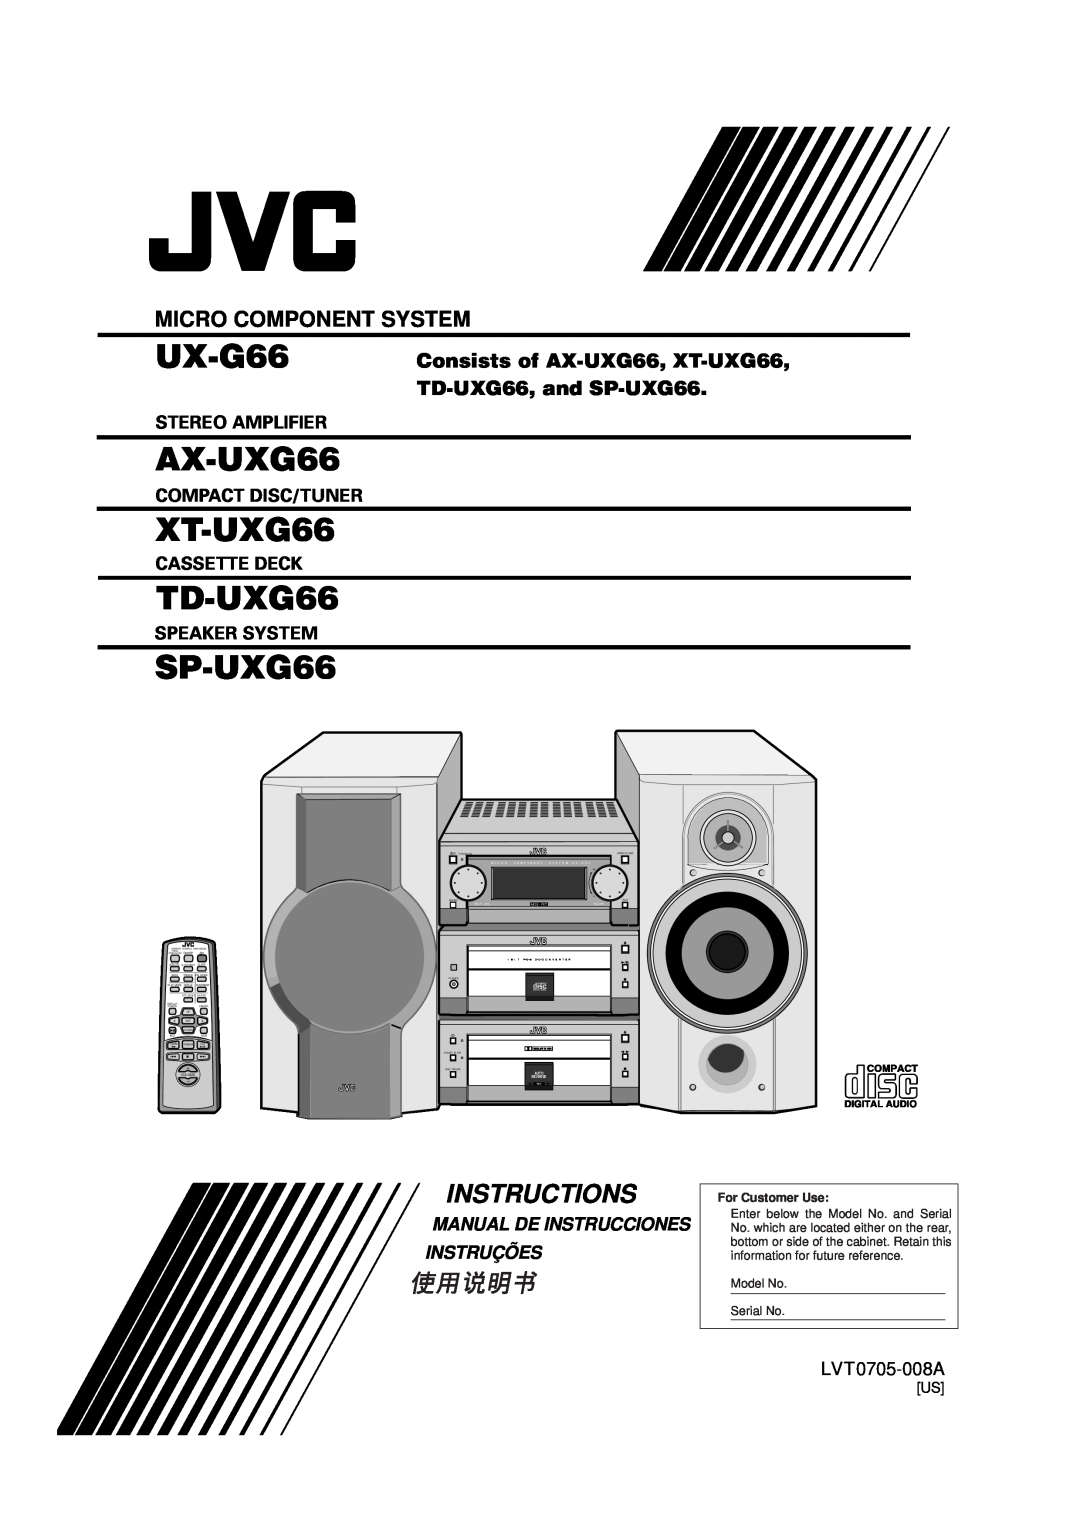 JVC SP-UXG66 manual Micro Component System, UX-G66, AX-UXG66, XT-UXG66, TD-UXG66, Instructions, Stereo Amplifier, Volume 